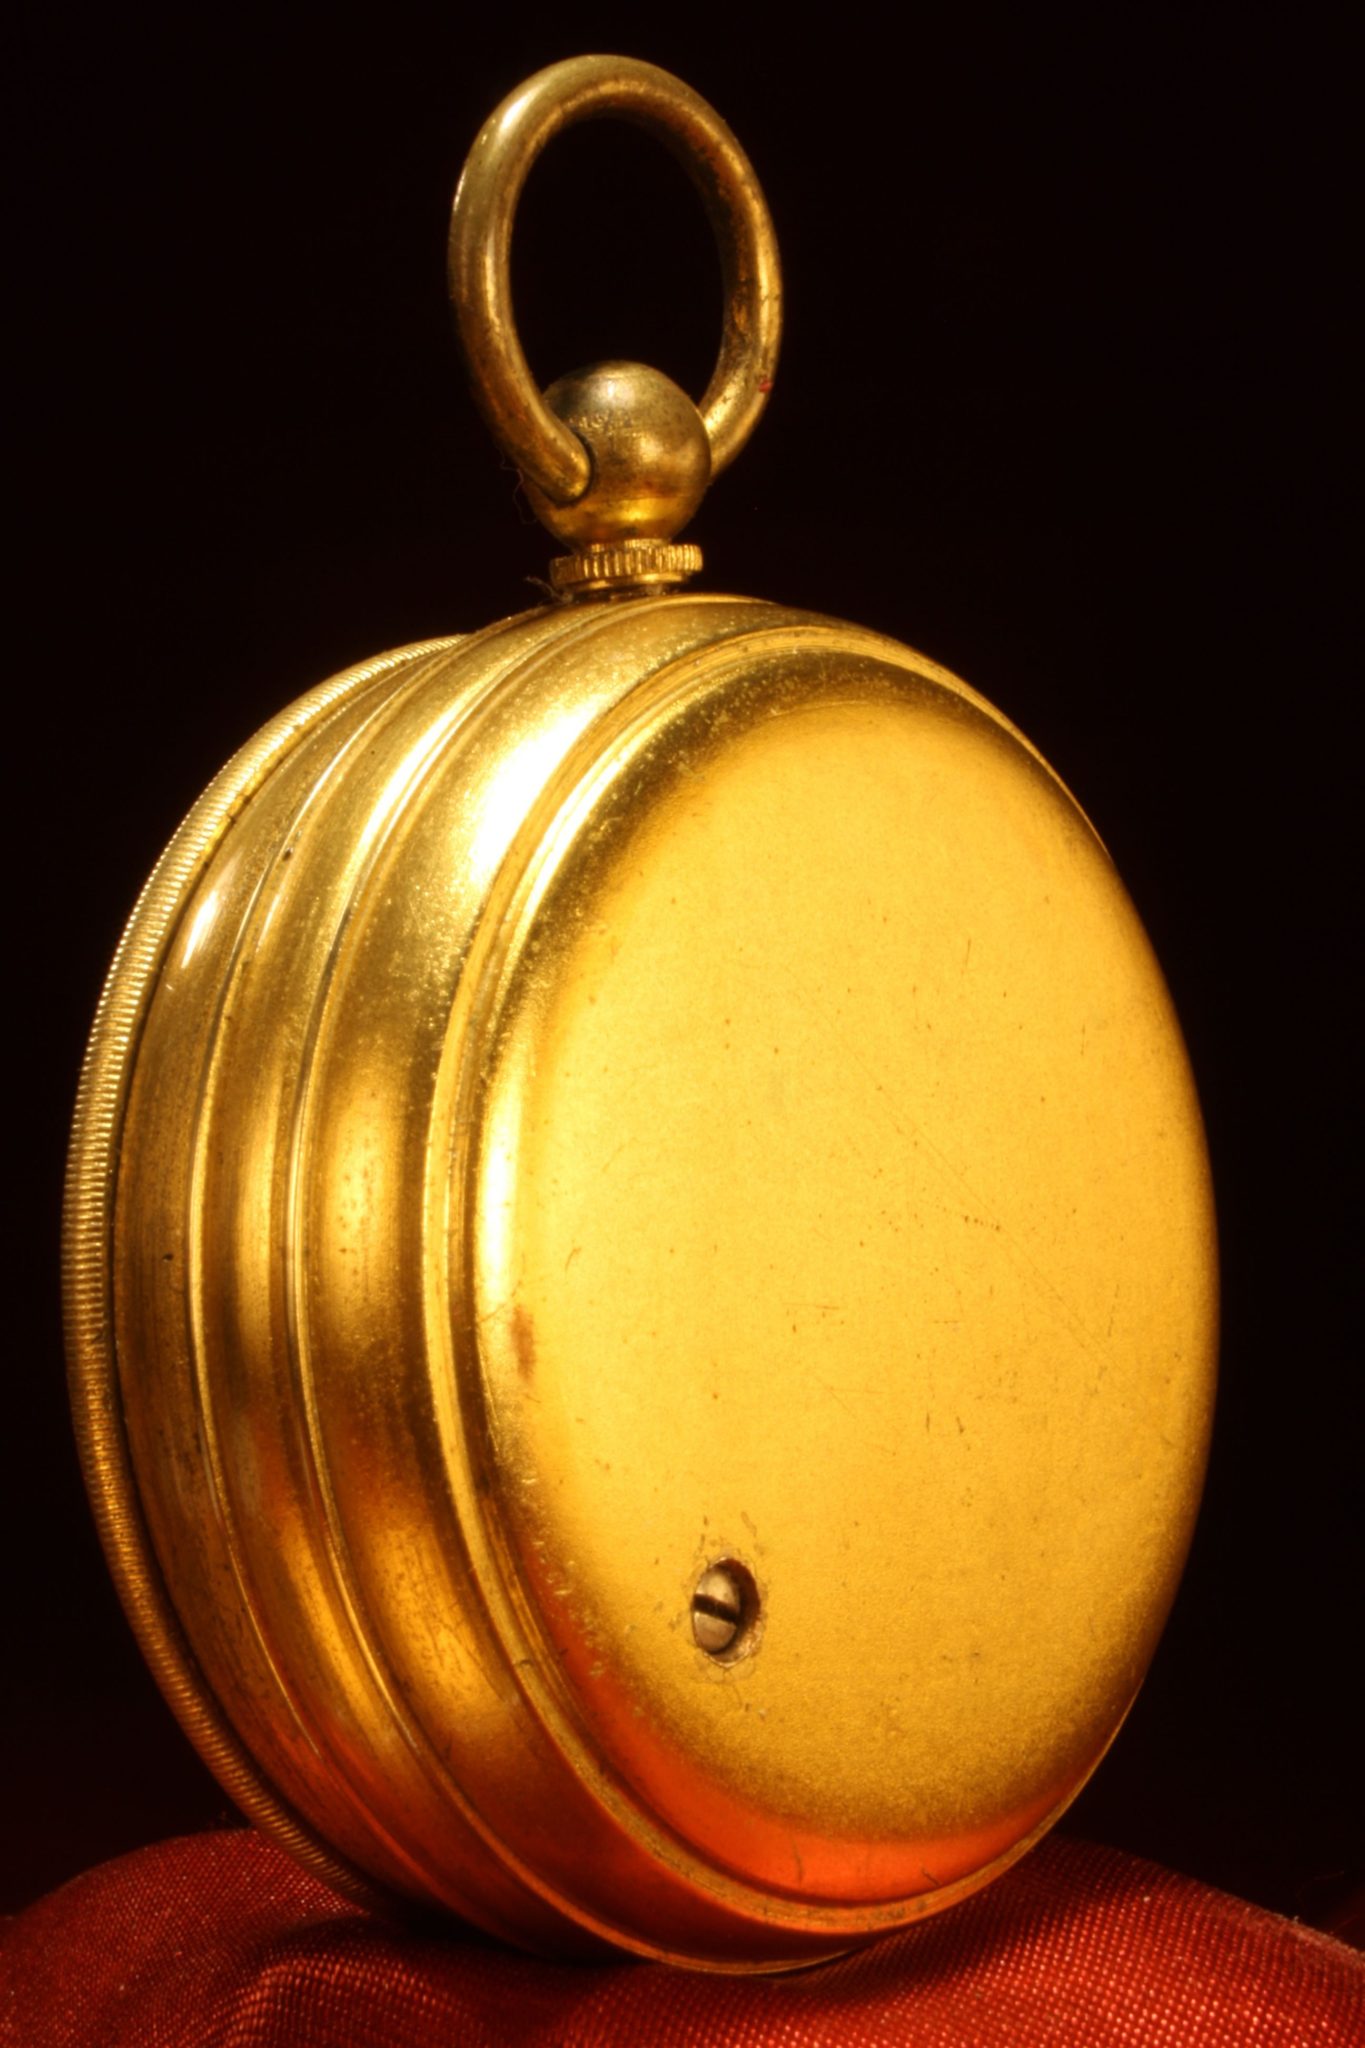 Image of Negretti & Zambra Pocket Barometer Retailed by ANCOSL c1870